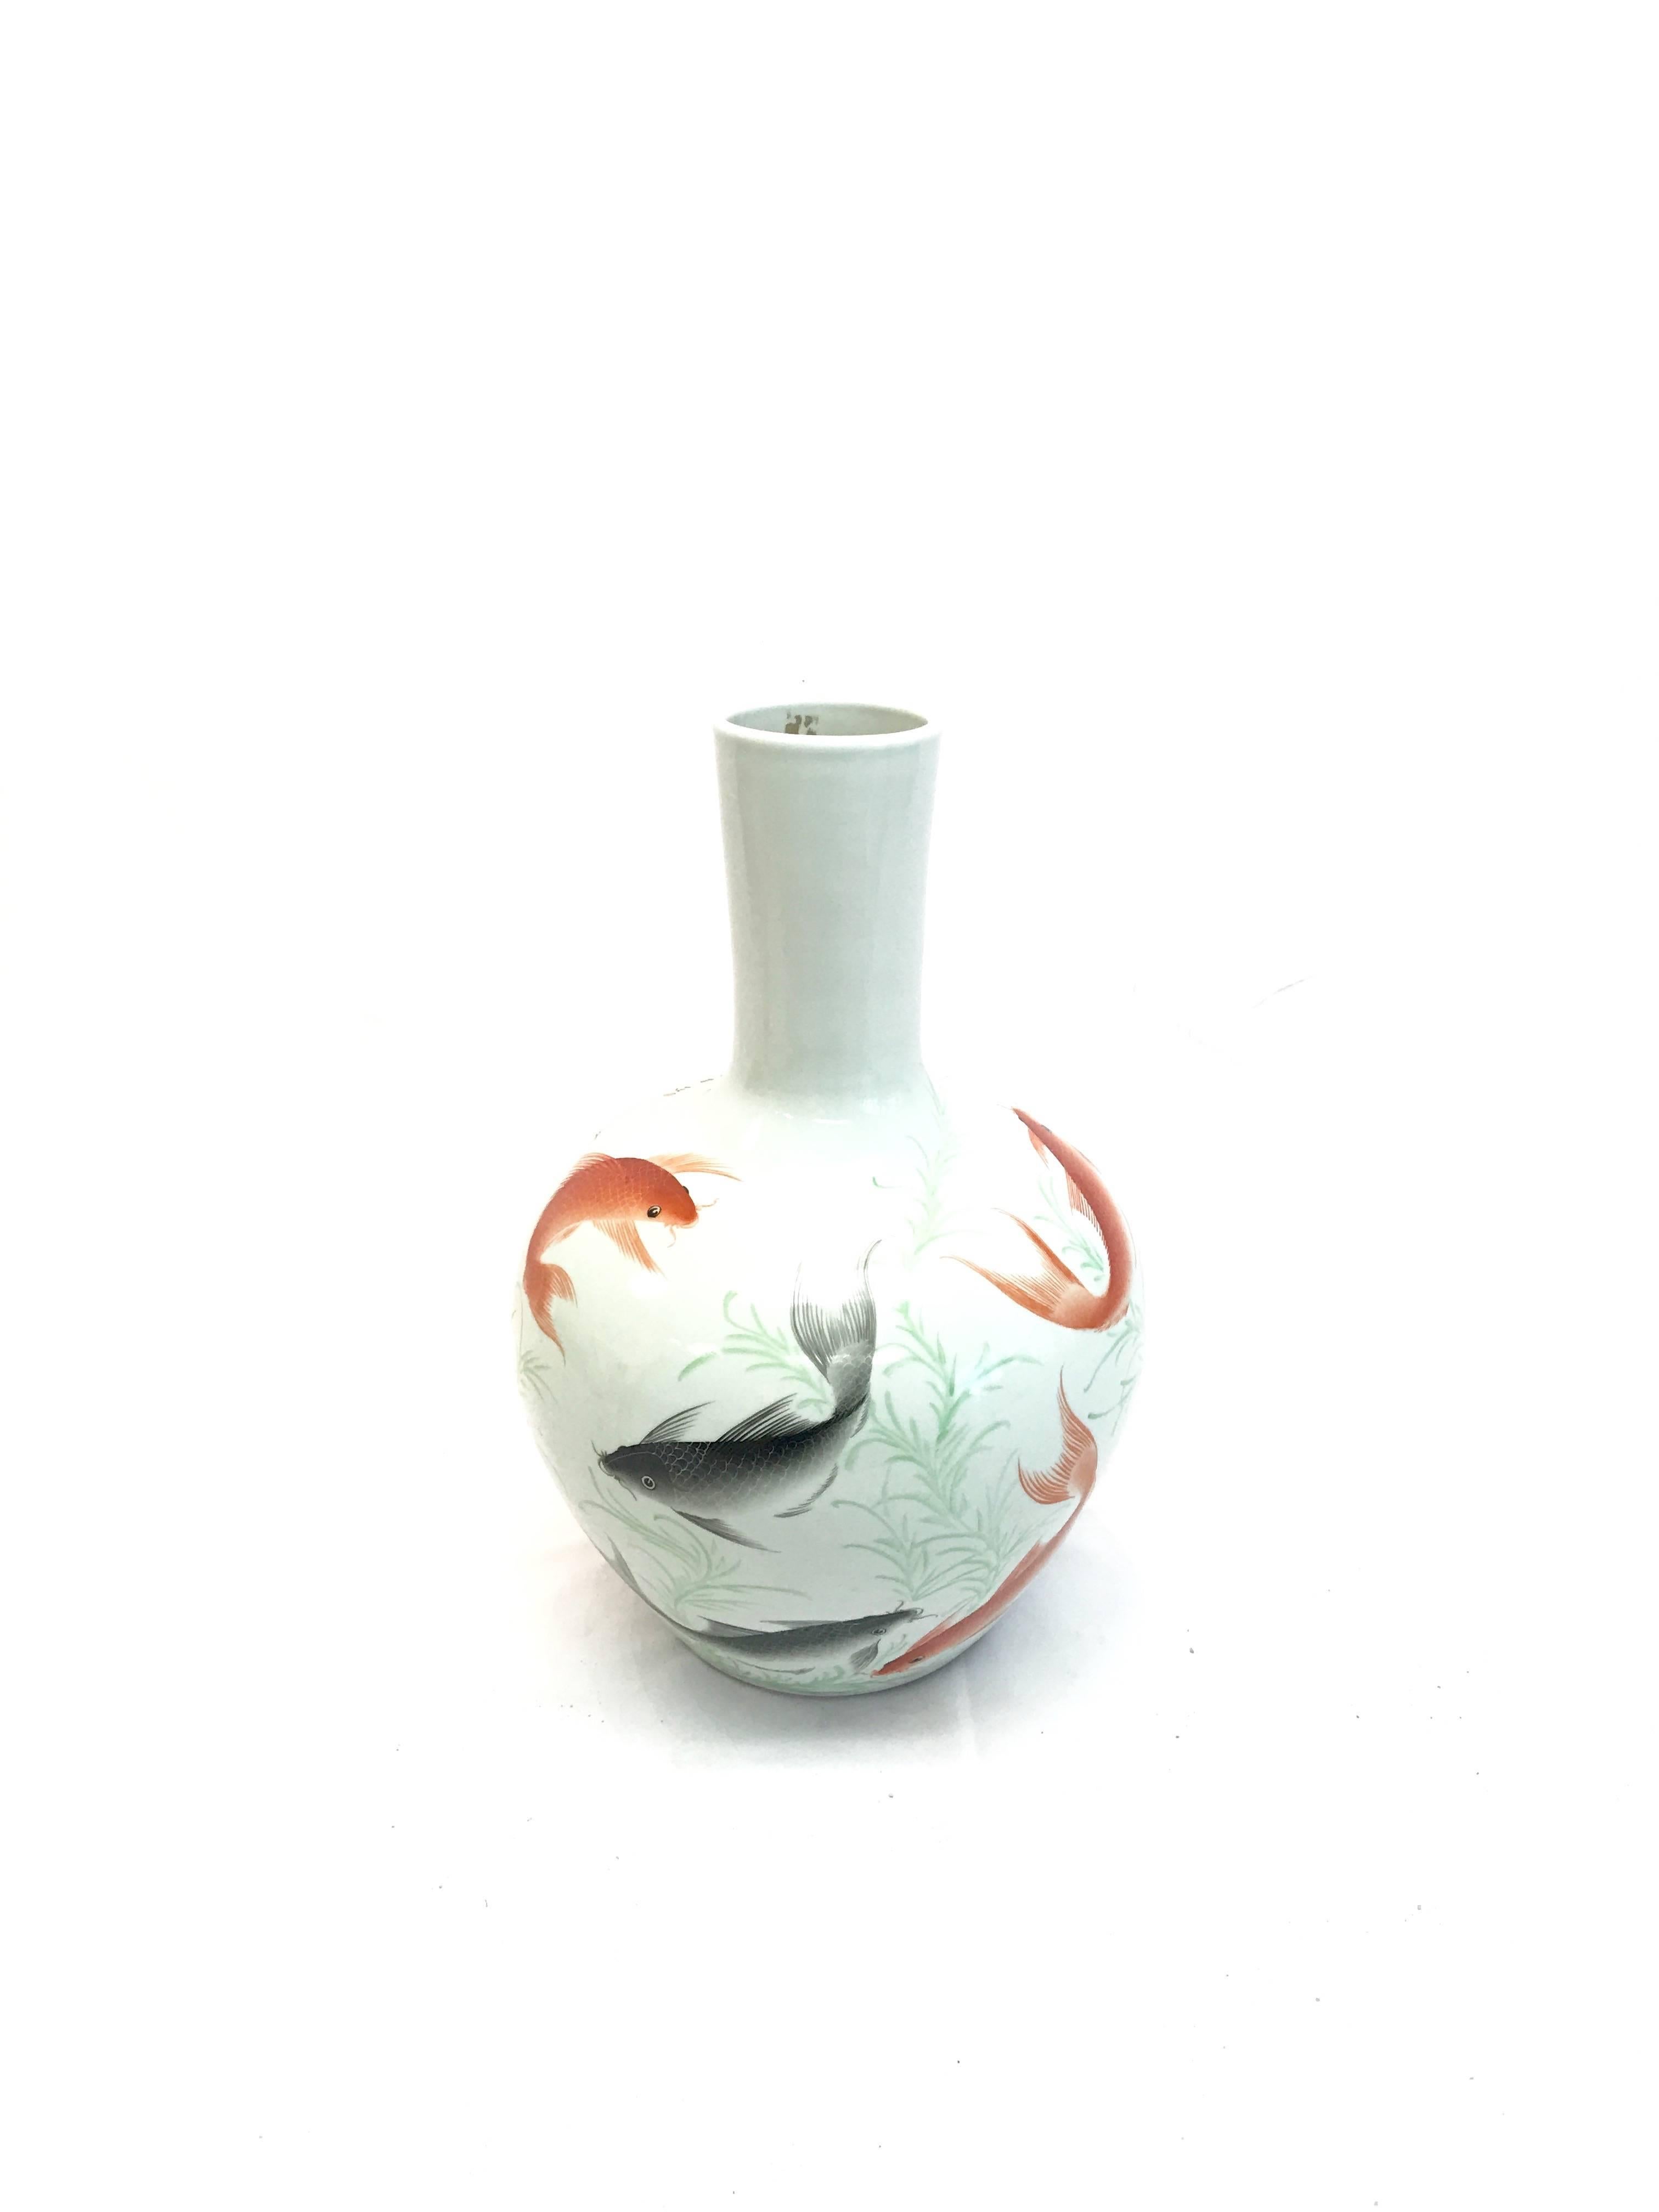 Fired Koi Pond Japanese Ceramic Vessel For Sale